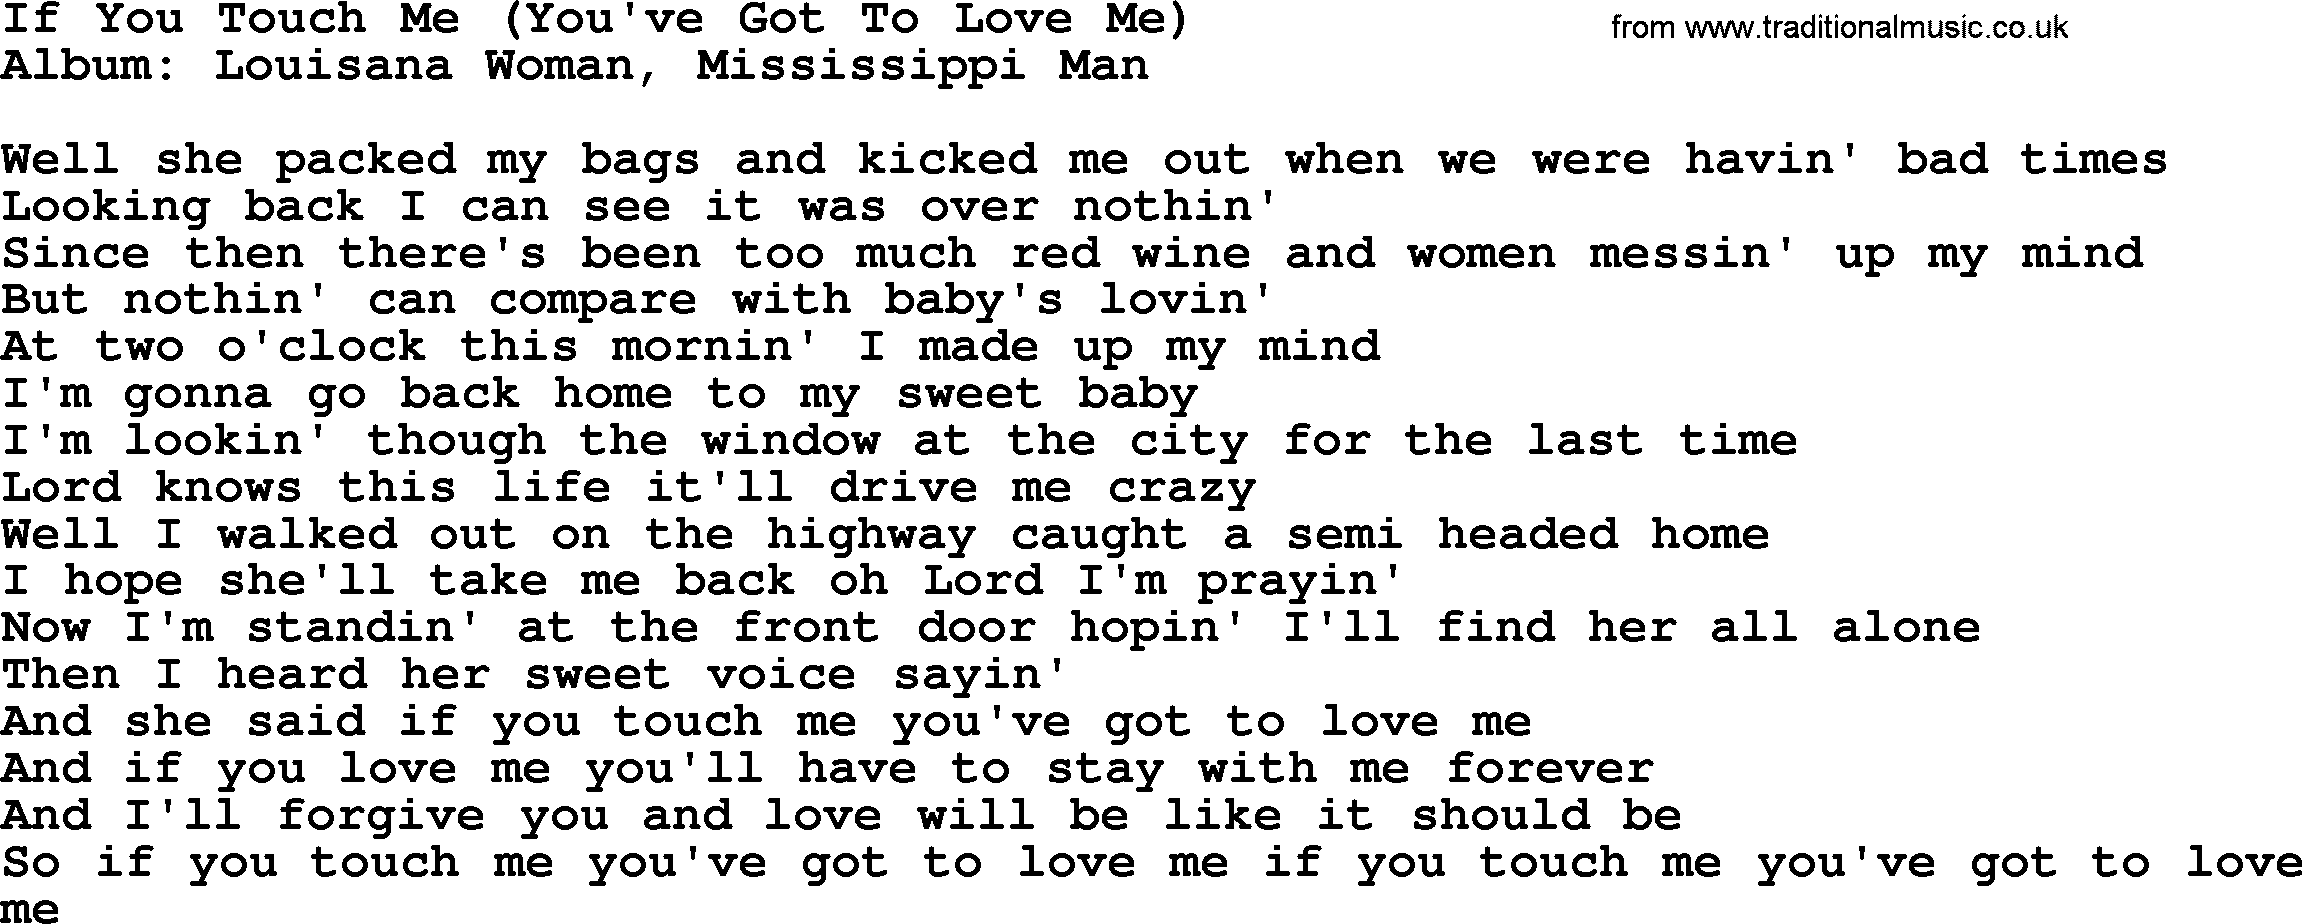 Loretta Lynn song: If You Touch Me (You've Got To Love Me) lyrics